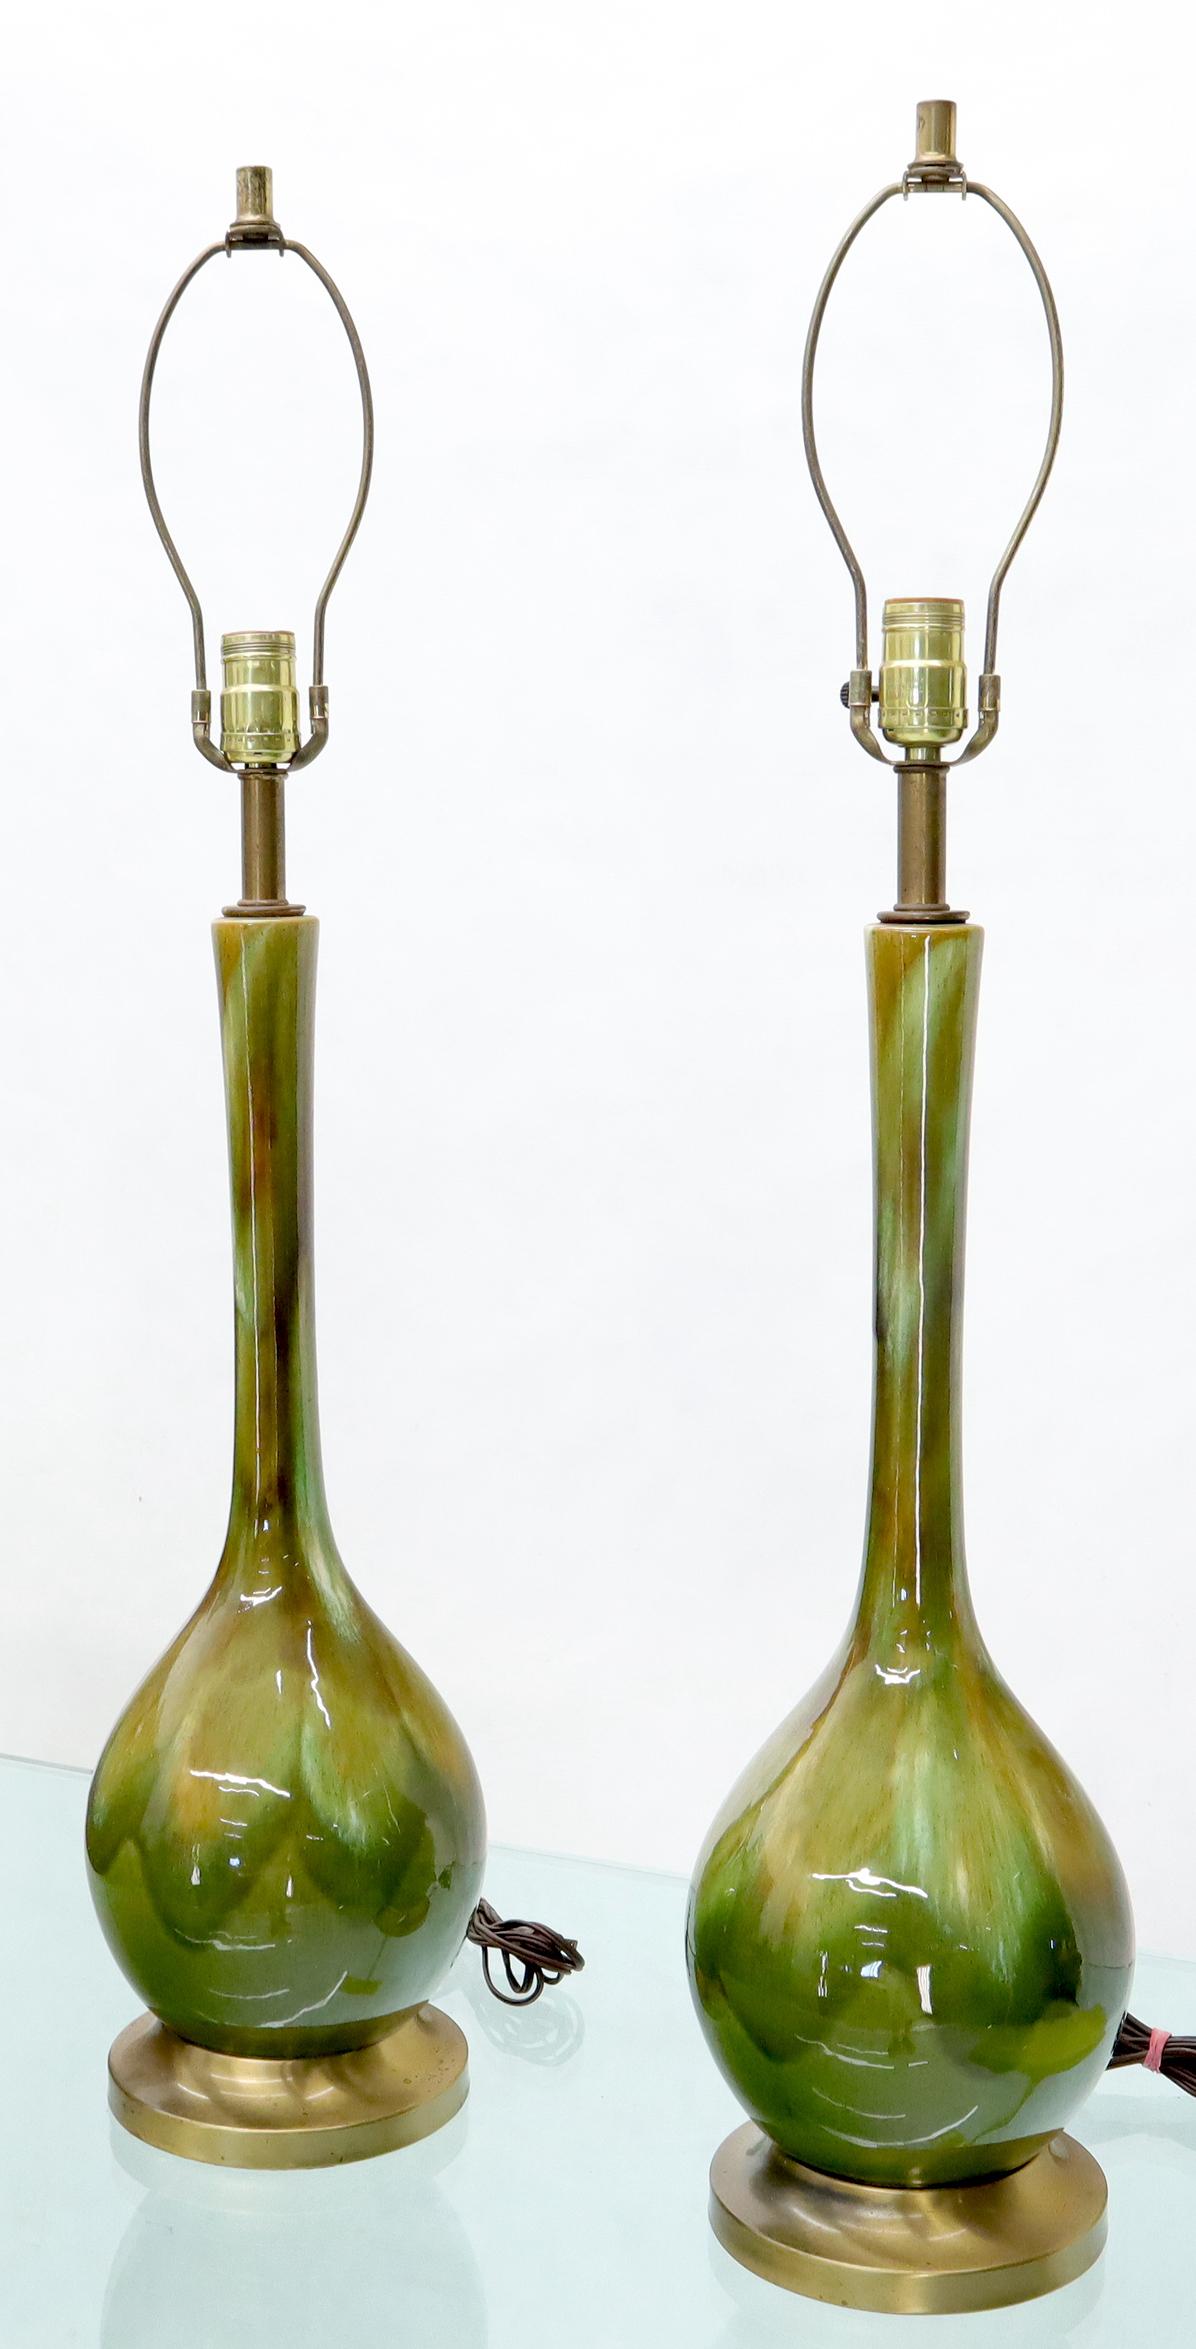 Pair of Mid-Century Modern onion shape glazed table lamps.